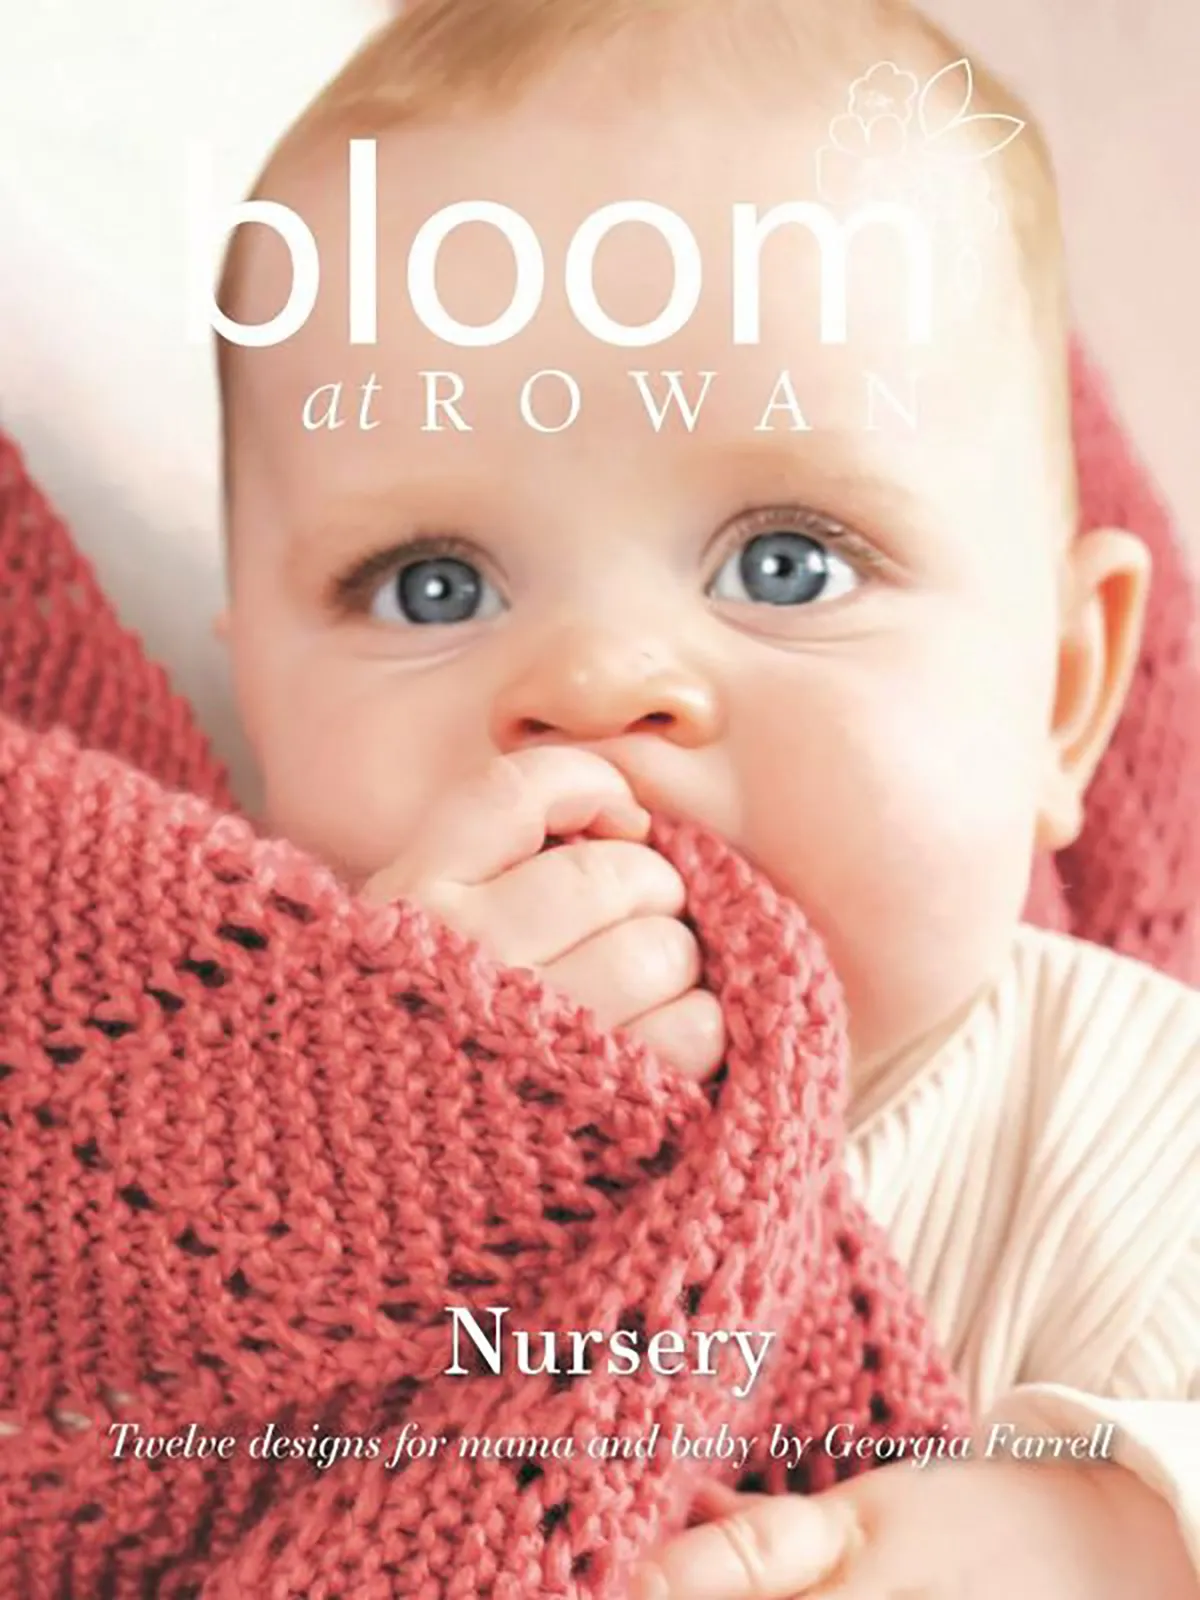 Bloom Nursery baby knitting book